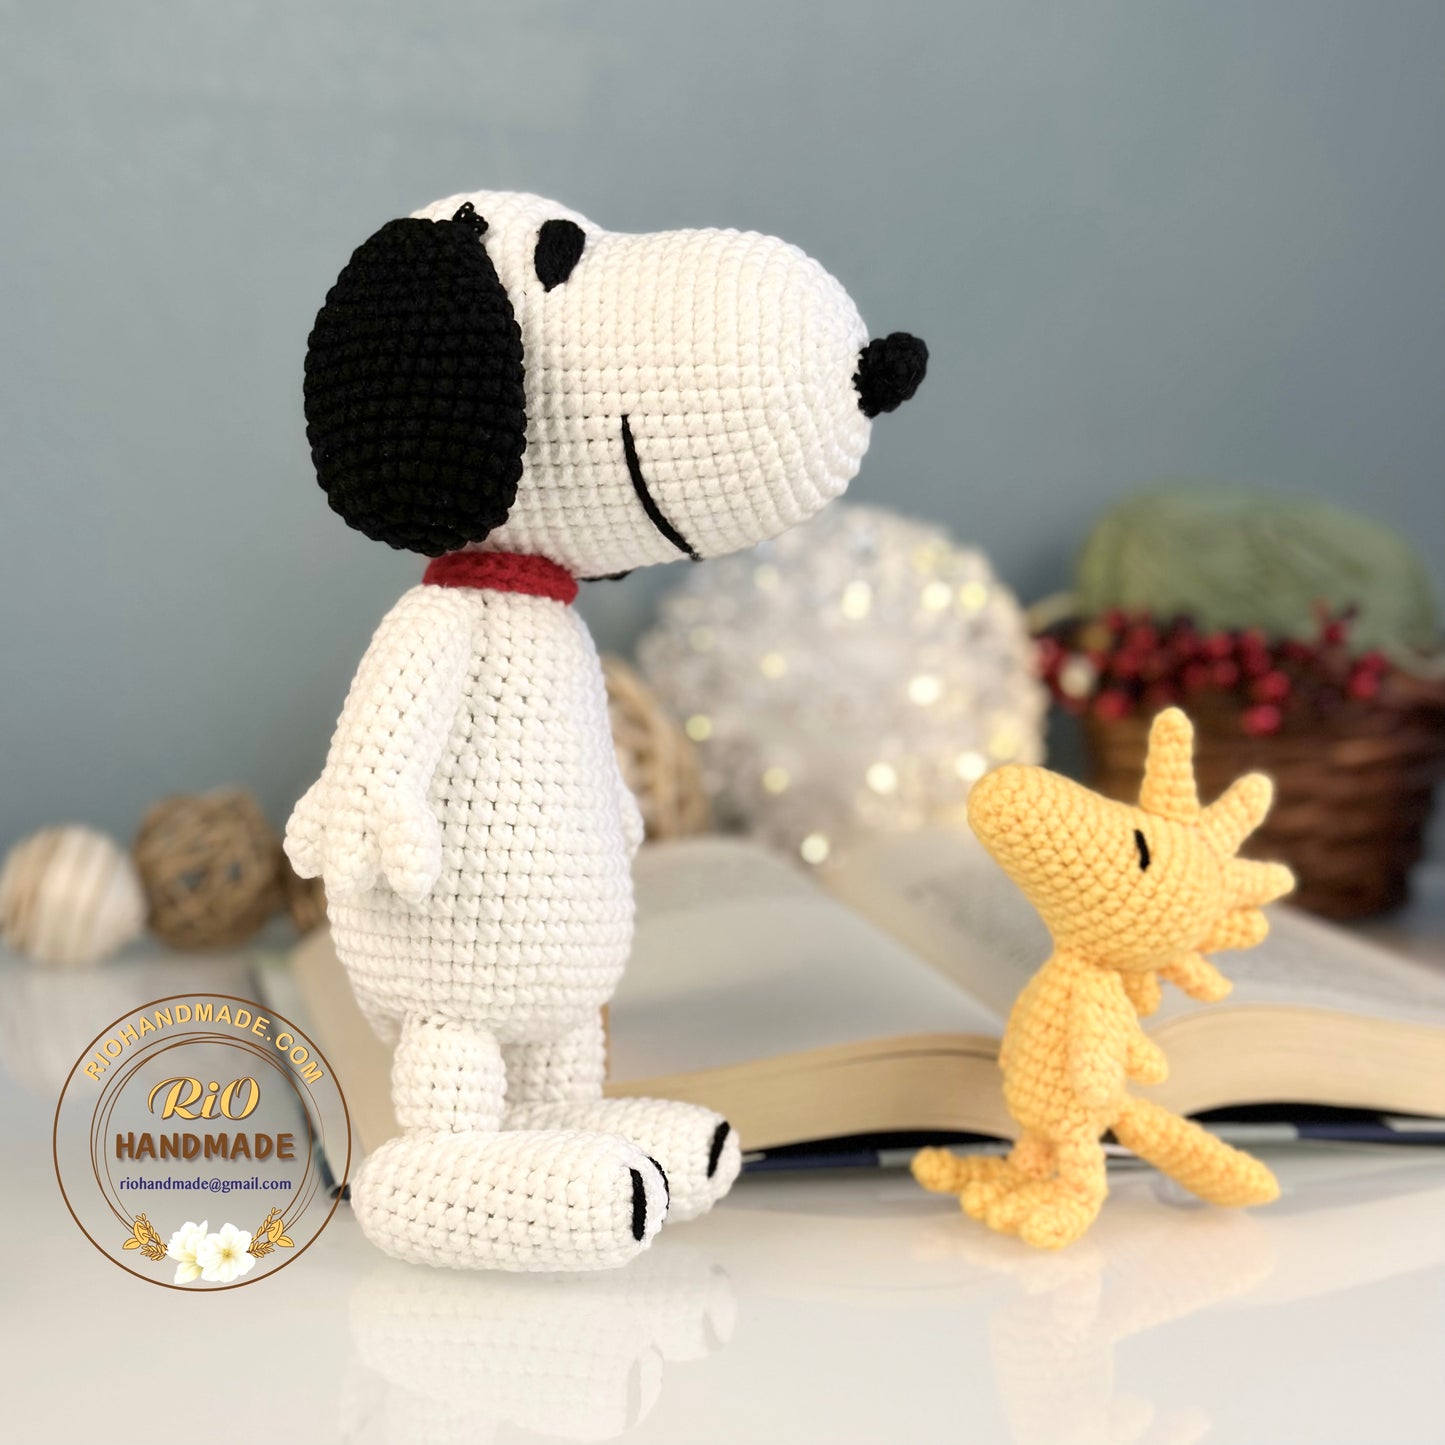 Ready To Ship, Handmade Snoopy Inspired Crochet, Amigurumi Woodstock Inspired, Cute Plush, Toy For Kid, Adult Hobby